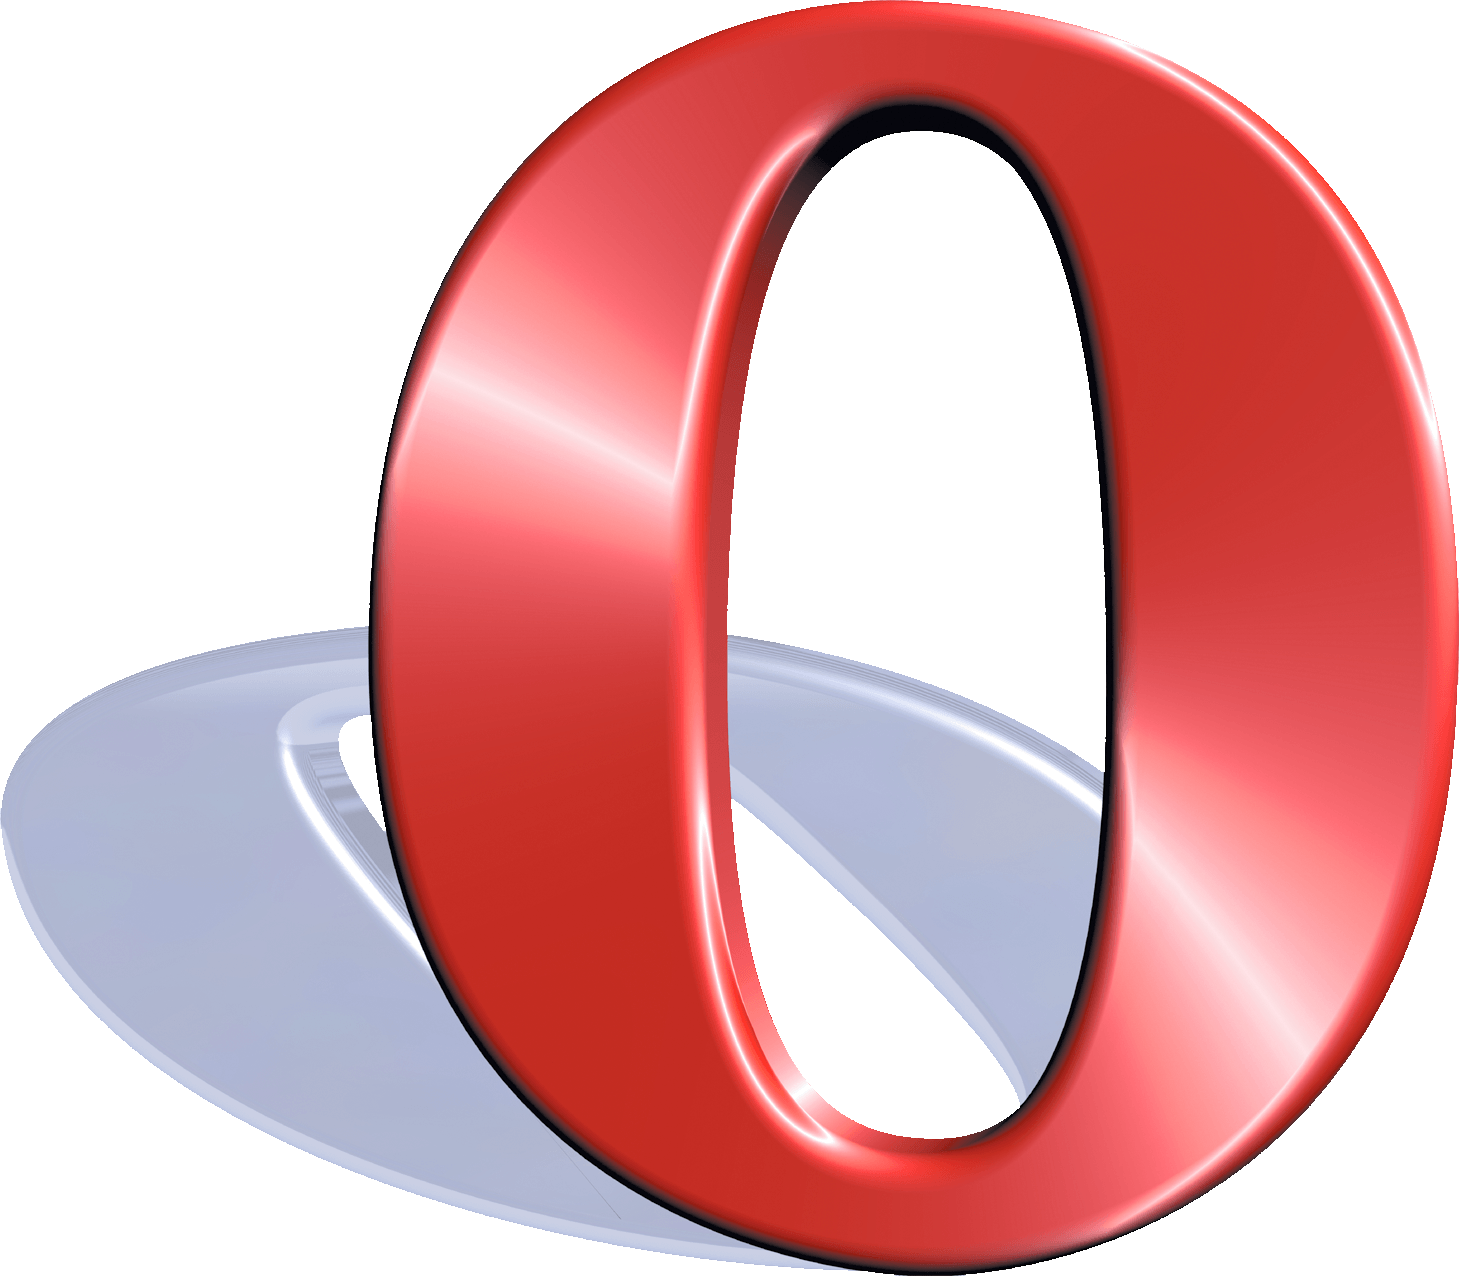 Red O Logo - Opera (web browser) | Logopedia | FANDOM powered by Wikia